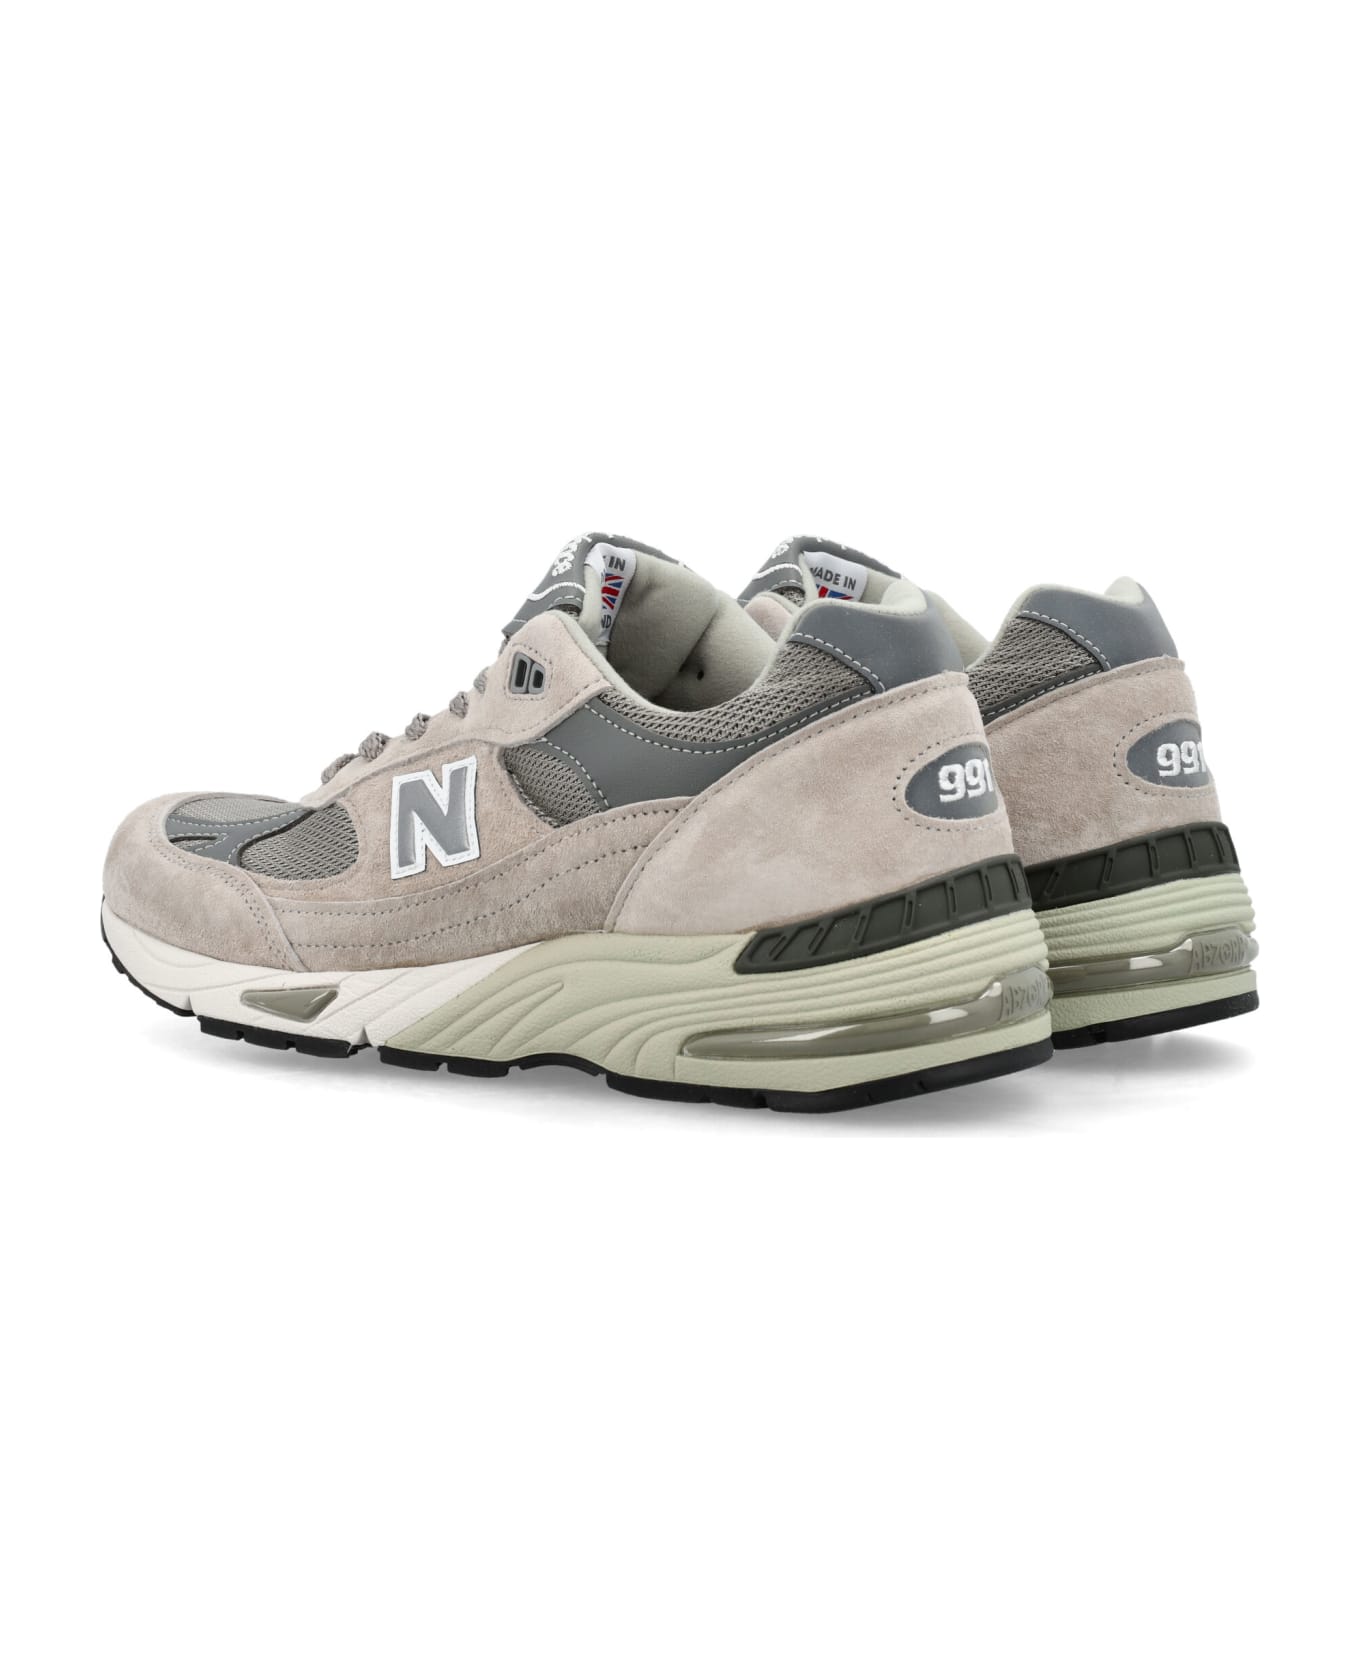 New Balance 991 Sneakers - GREY